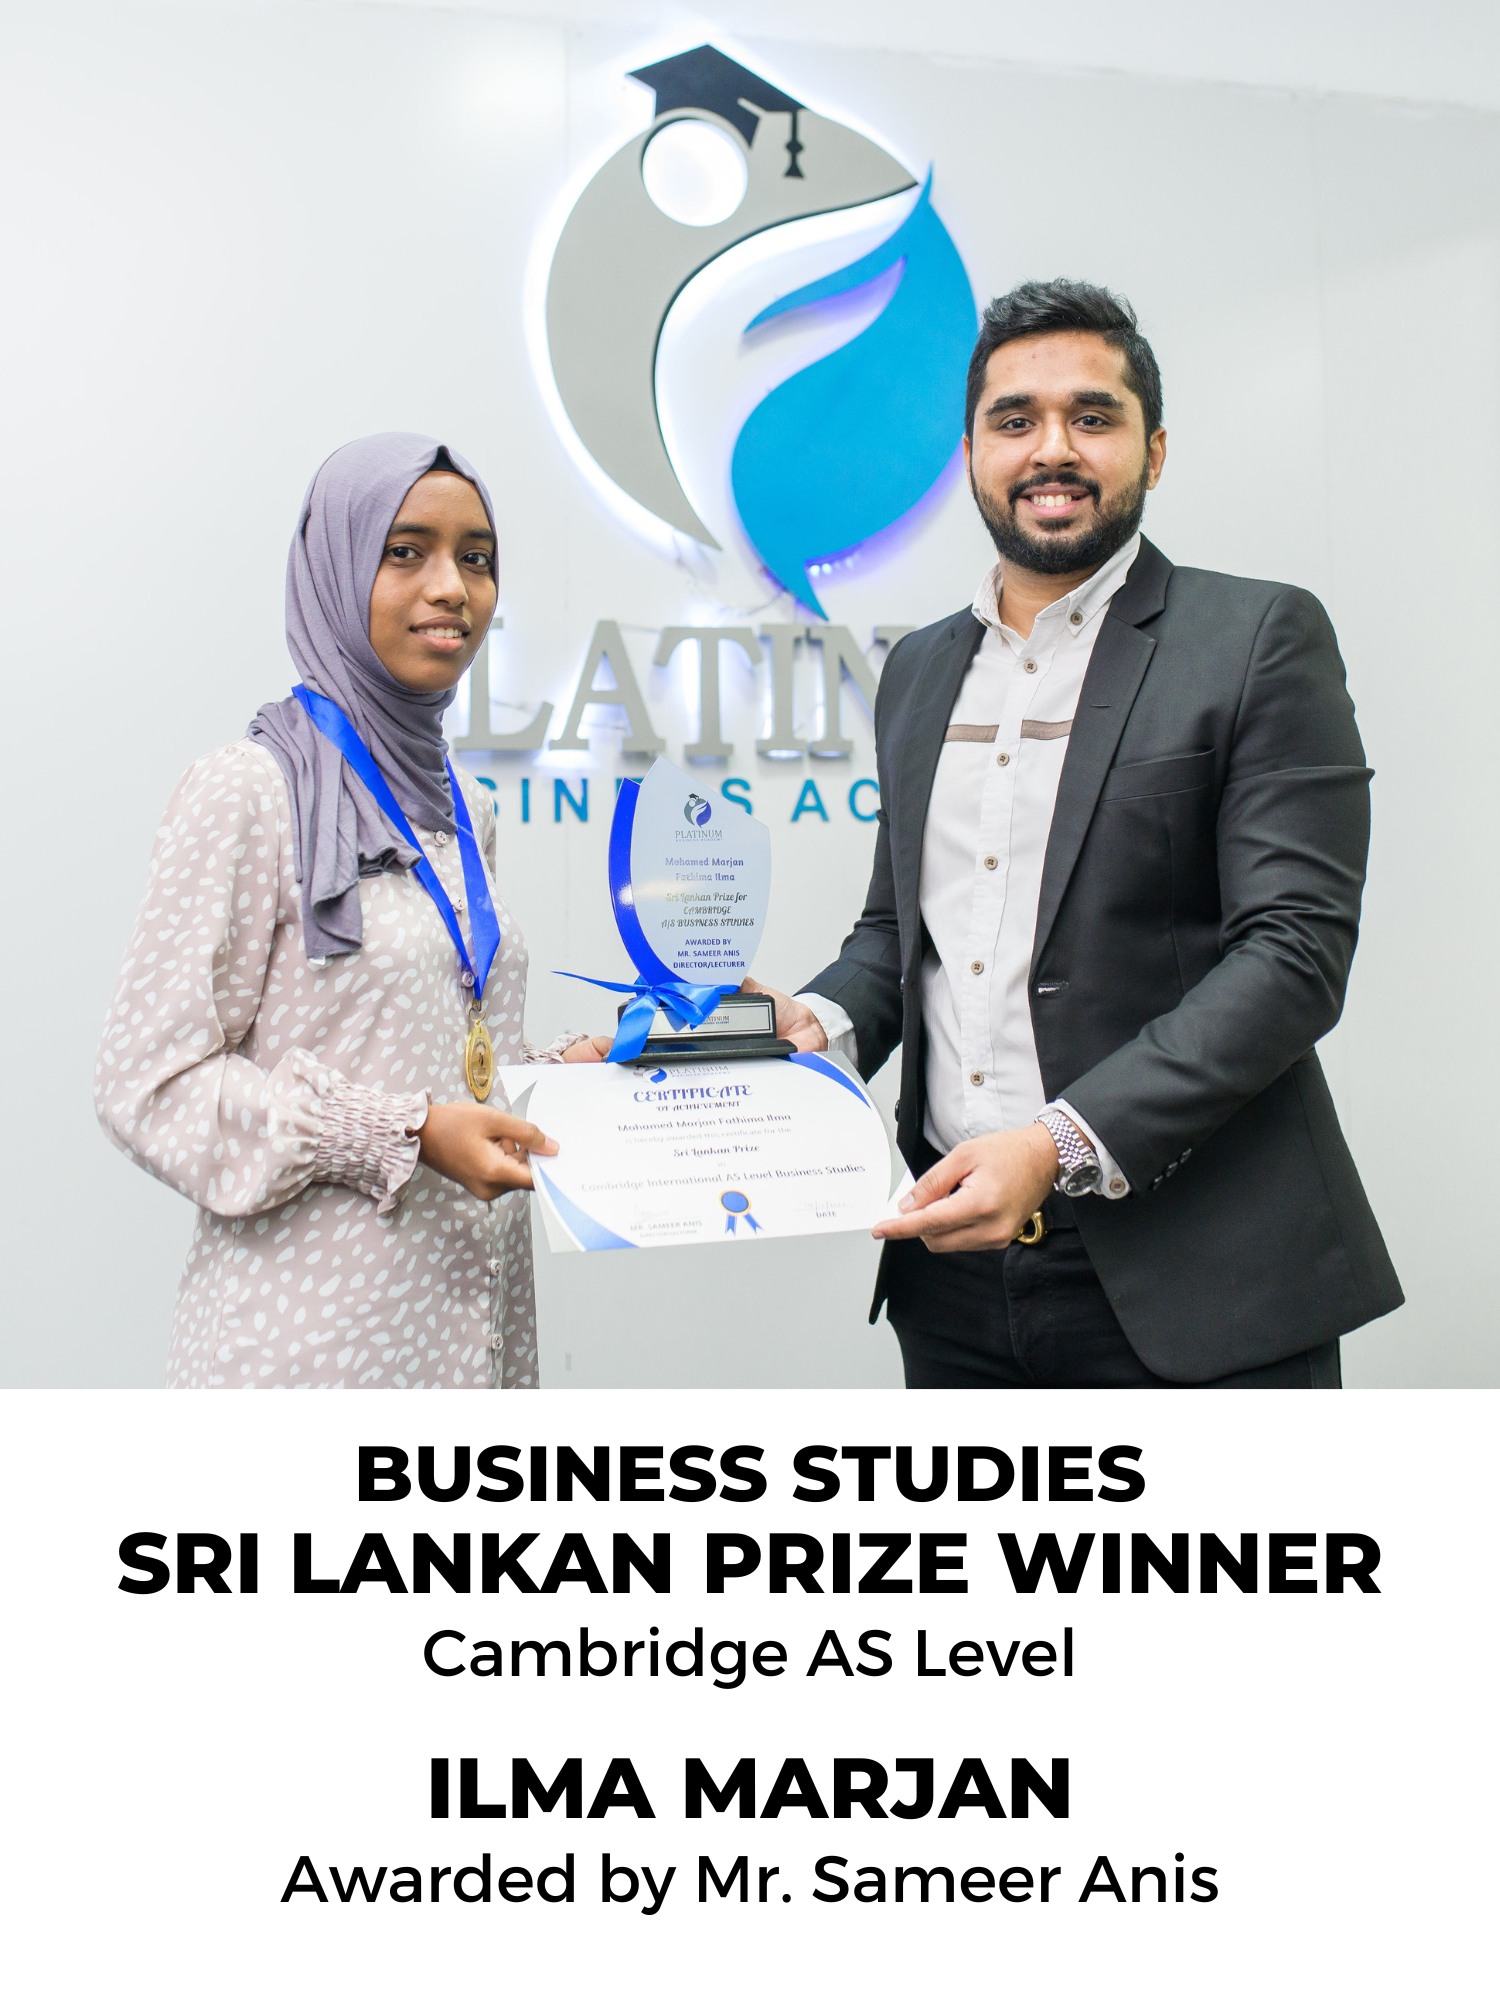 Cambridge AS Level Business Studies Sri Lankan Prize Winner: Ilma Marjan
Lecturer: Mr. Sameer Anis